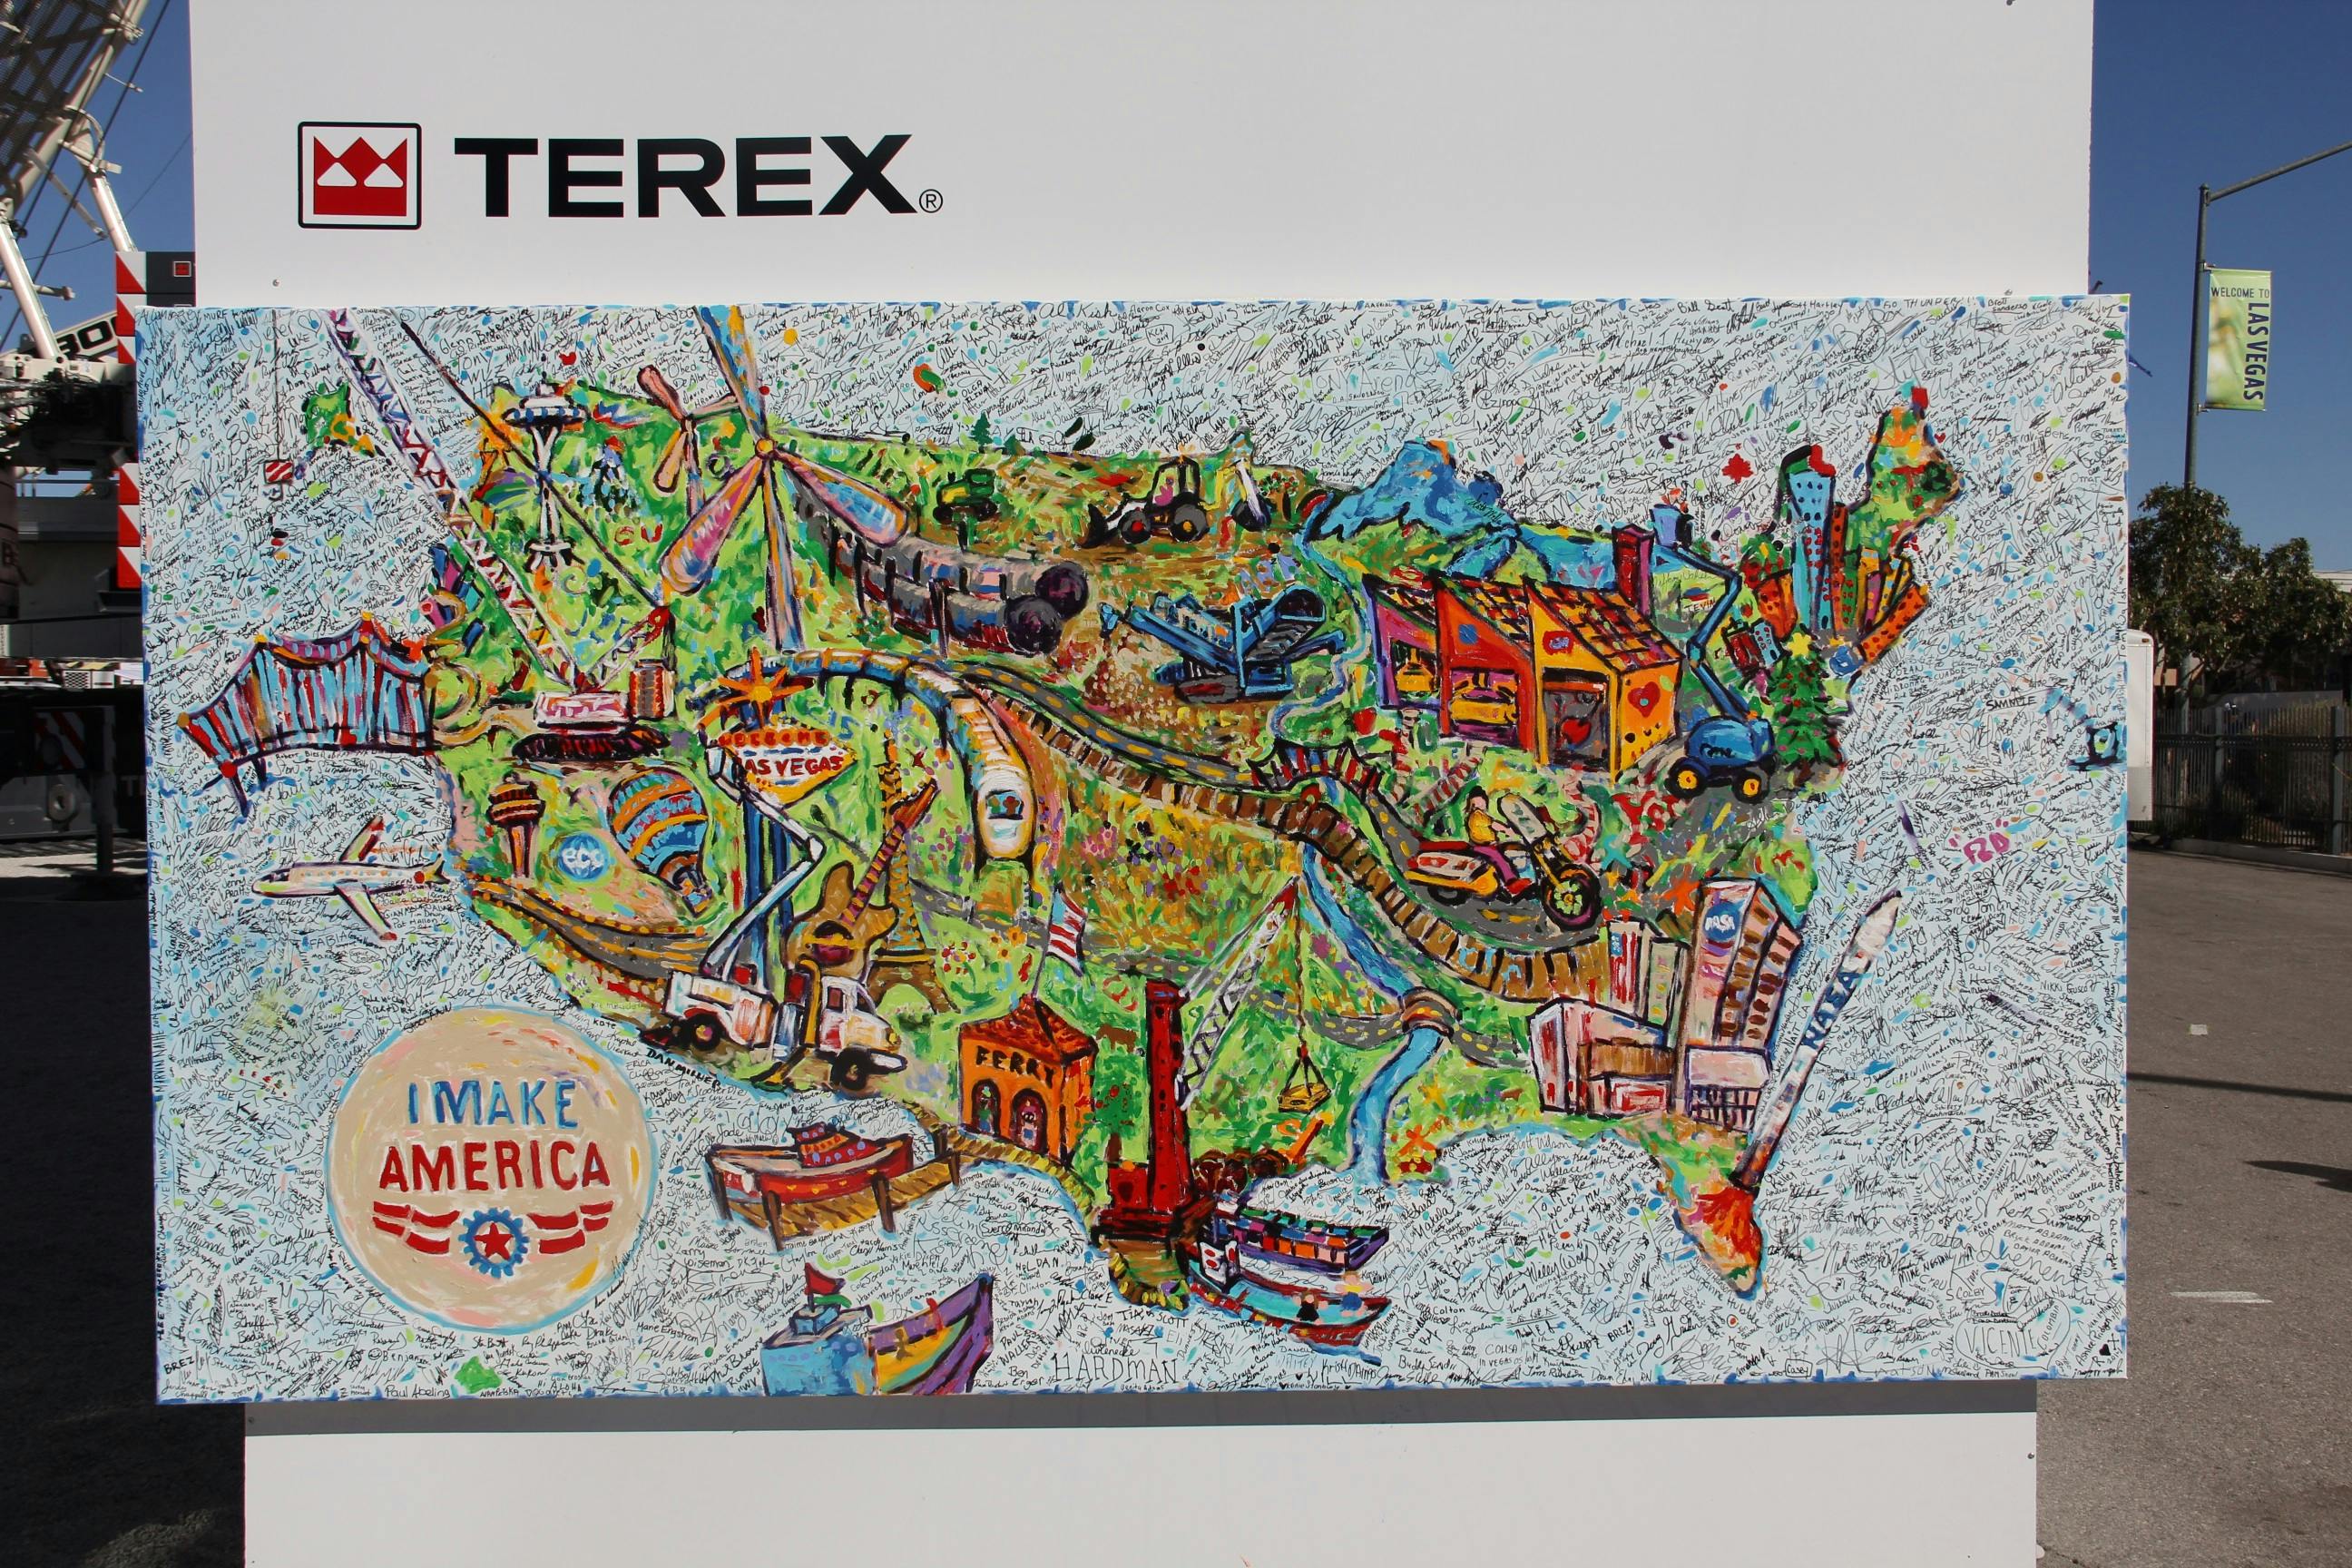 Terex Donates ConExpo "I Make America" Art to AEM | Industry News